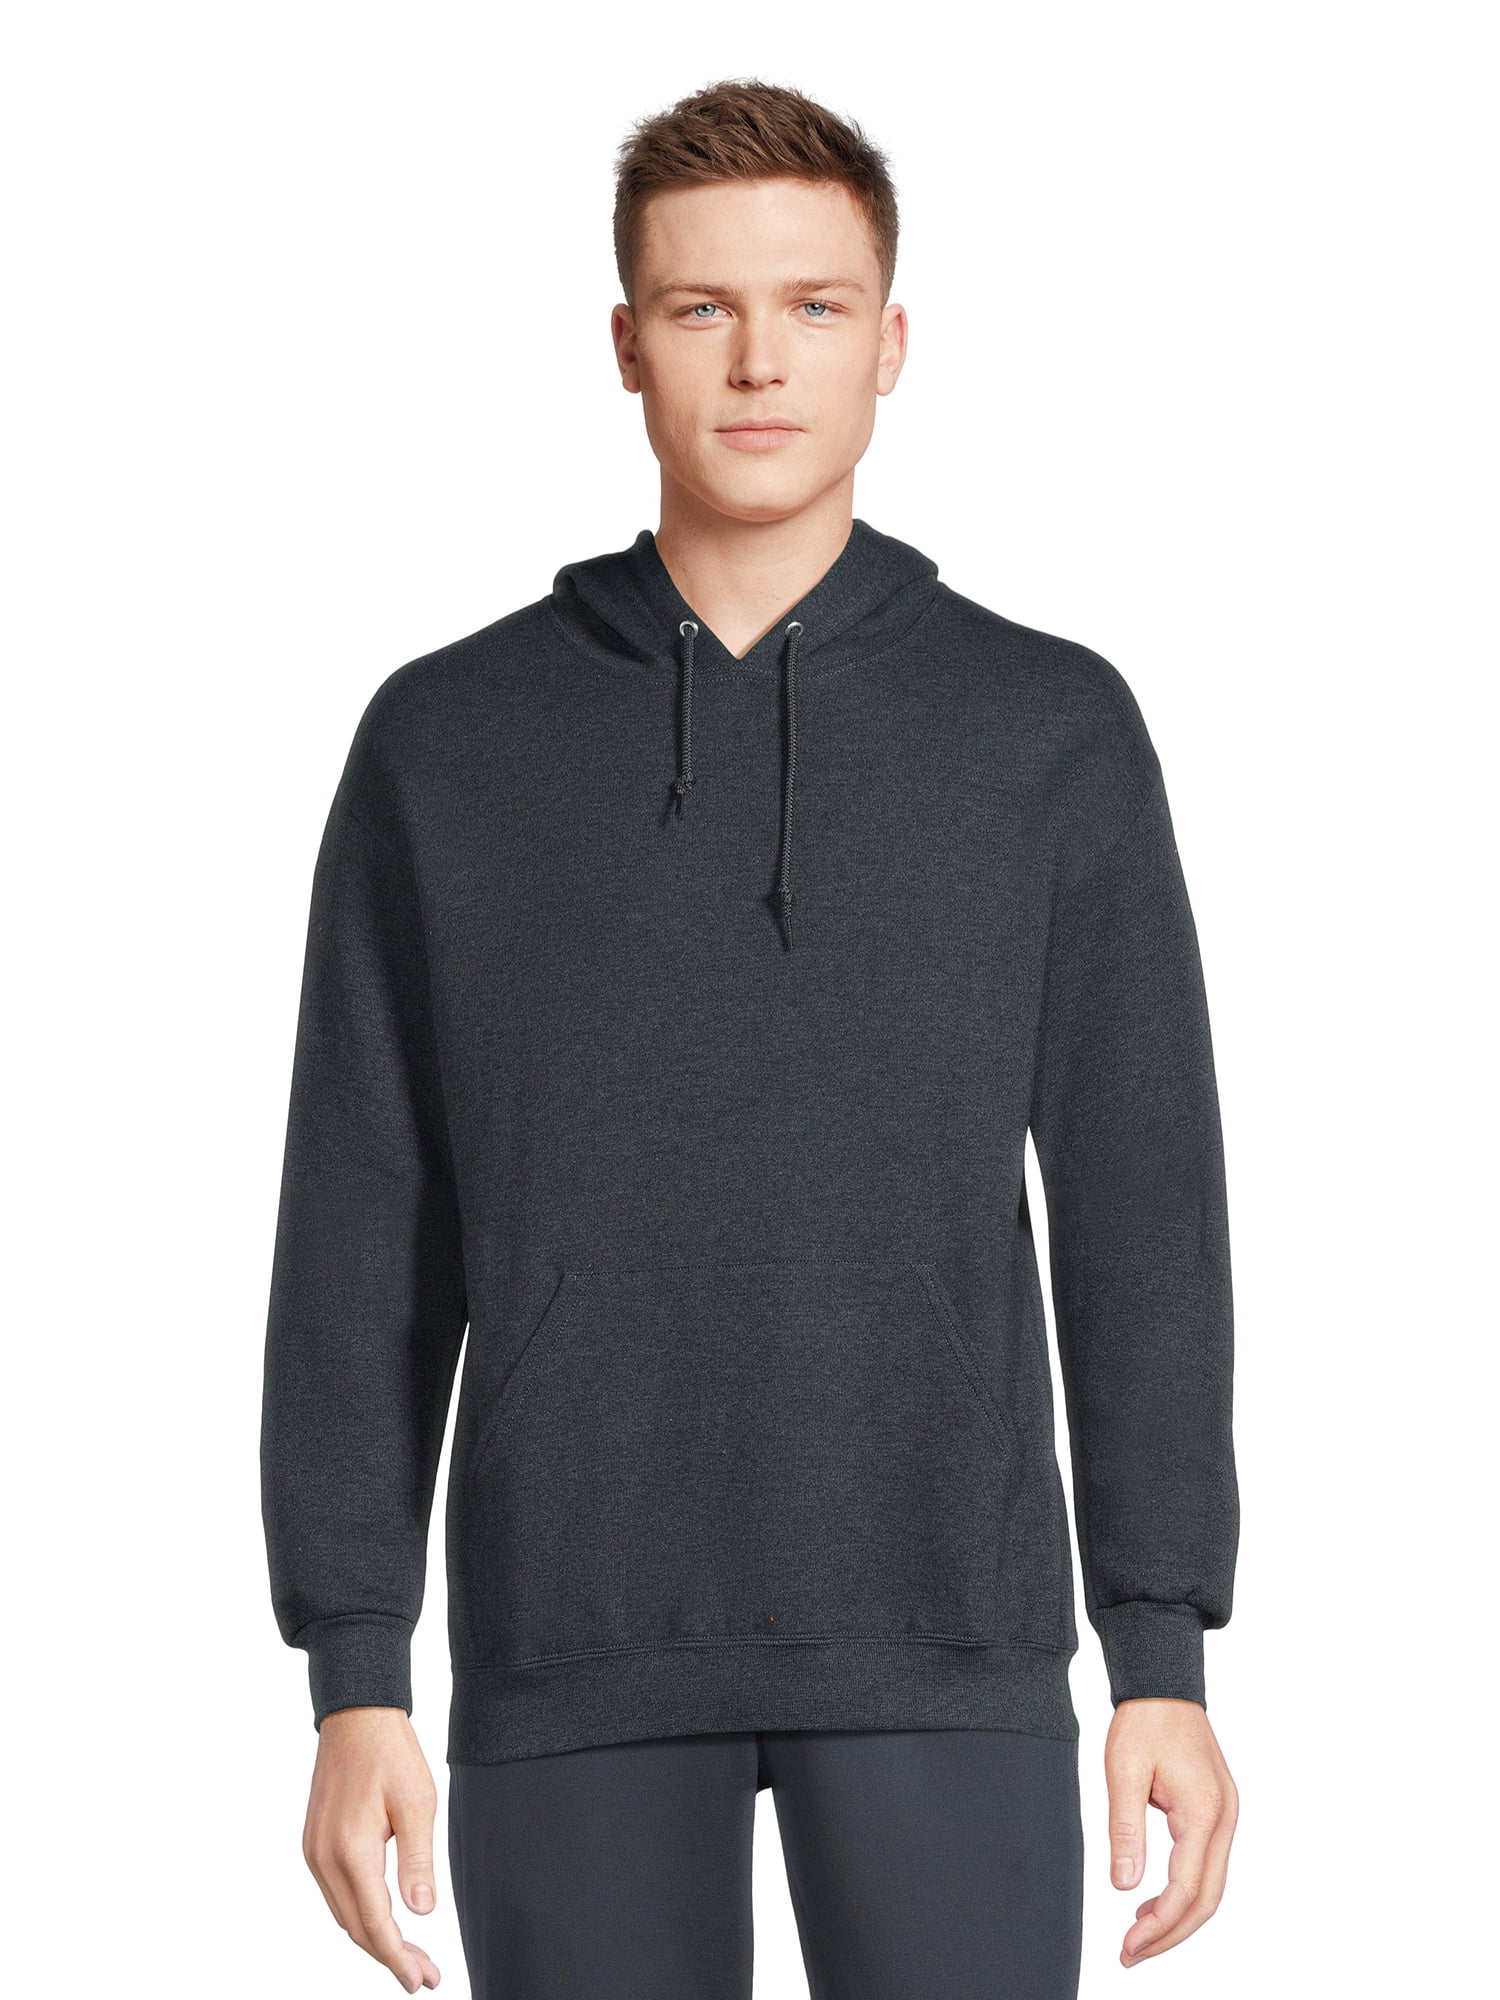 Athletic Works Men's Fleece Pullover Hoodie Sweatshirt 